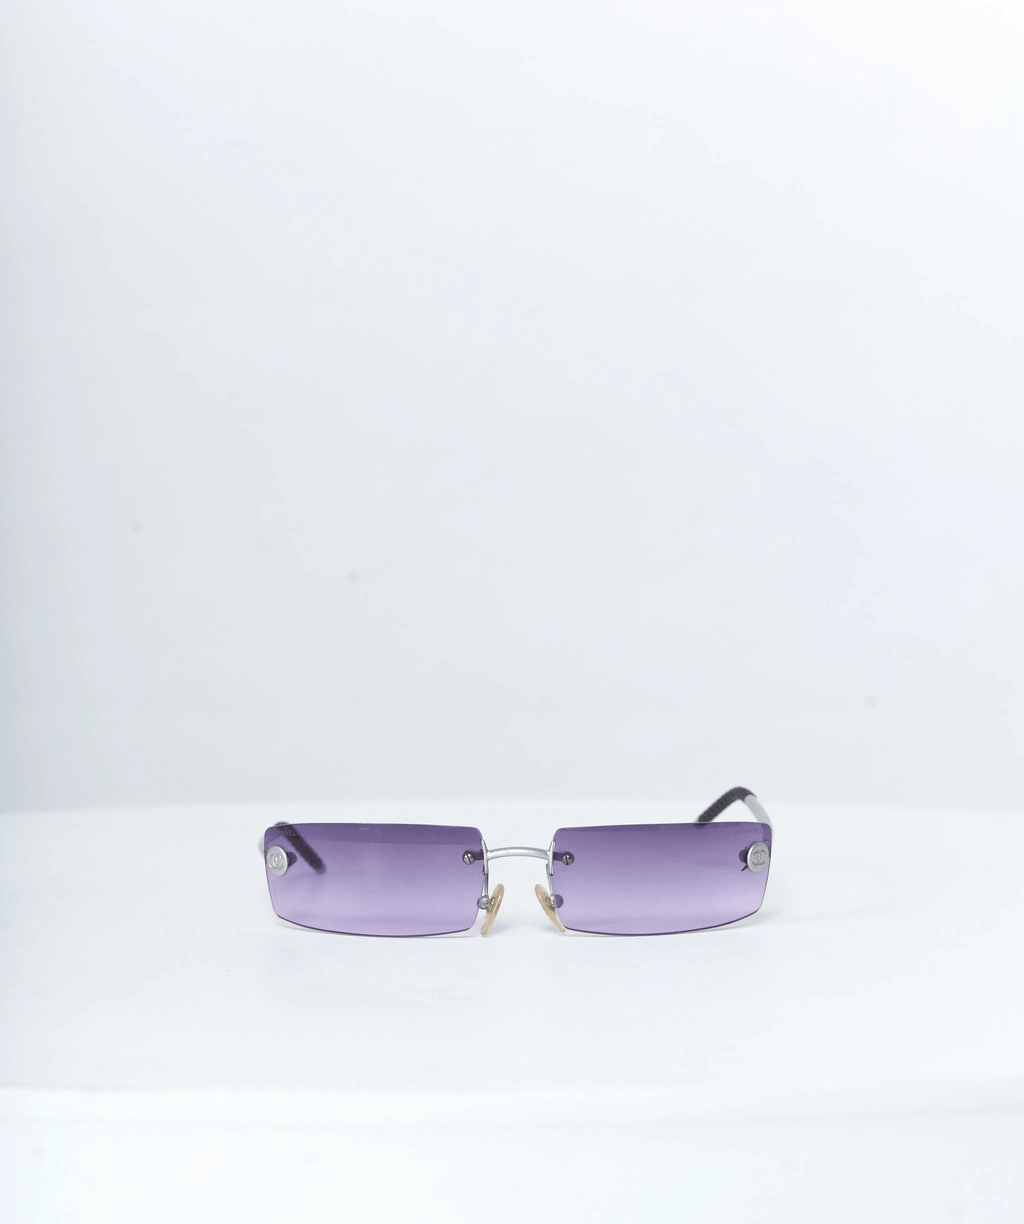 Chanel Vintage 1990s #4009 Rimless Sunglasses - Purple